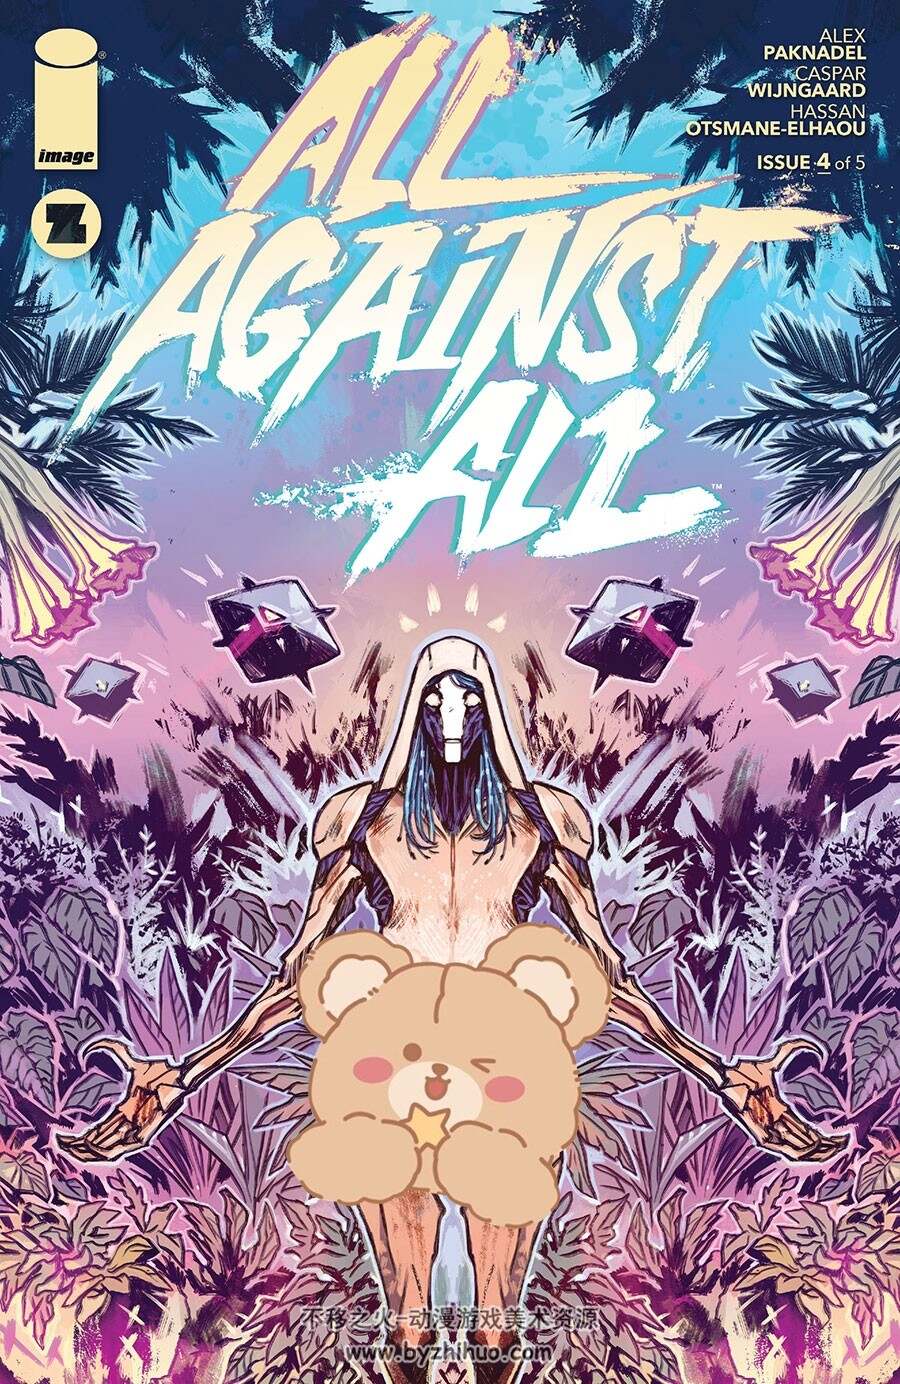 All Against All 第4册 Alex Paknadel 漫画下载